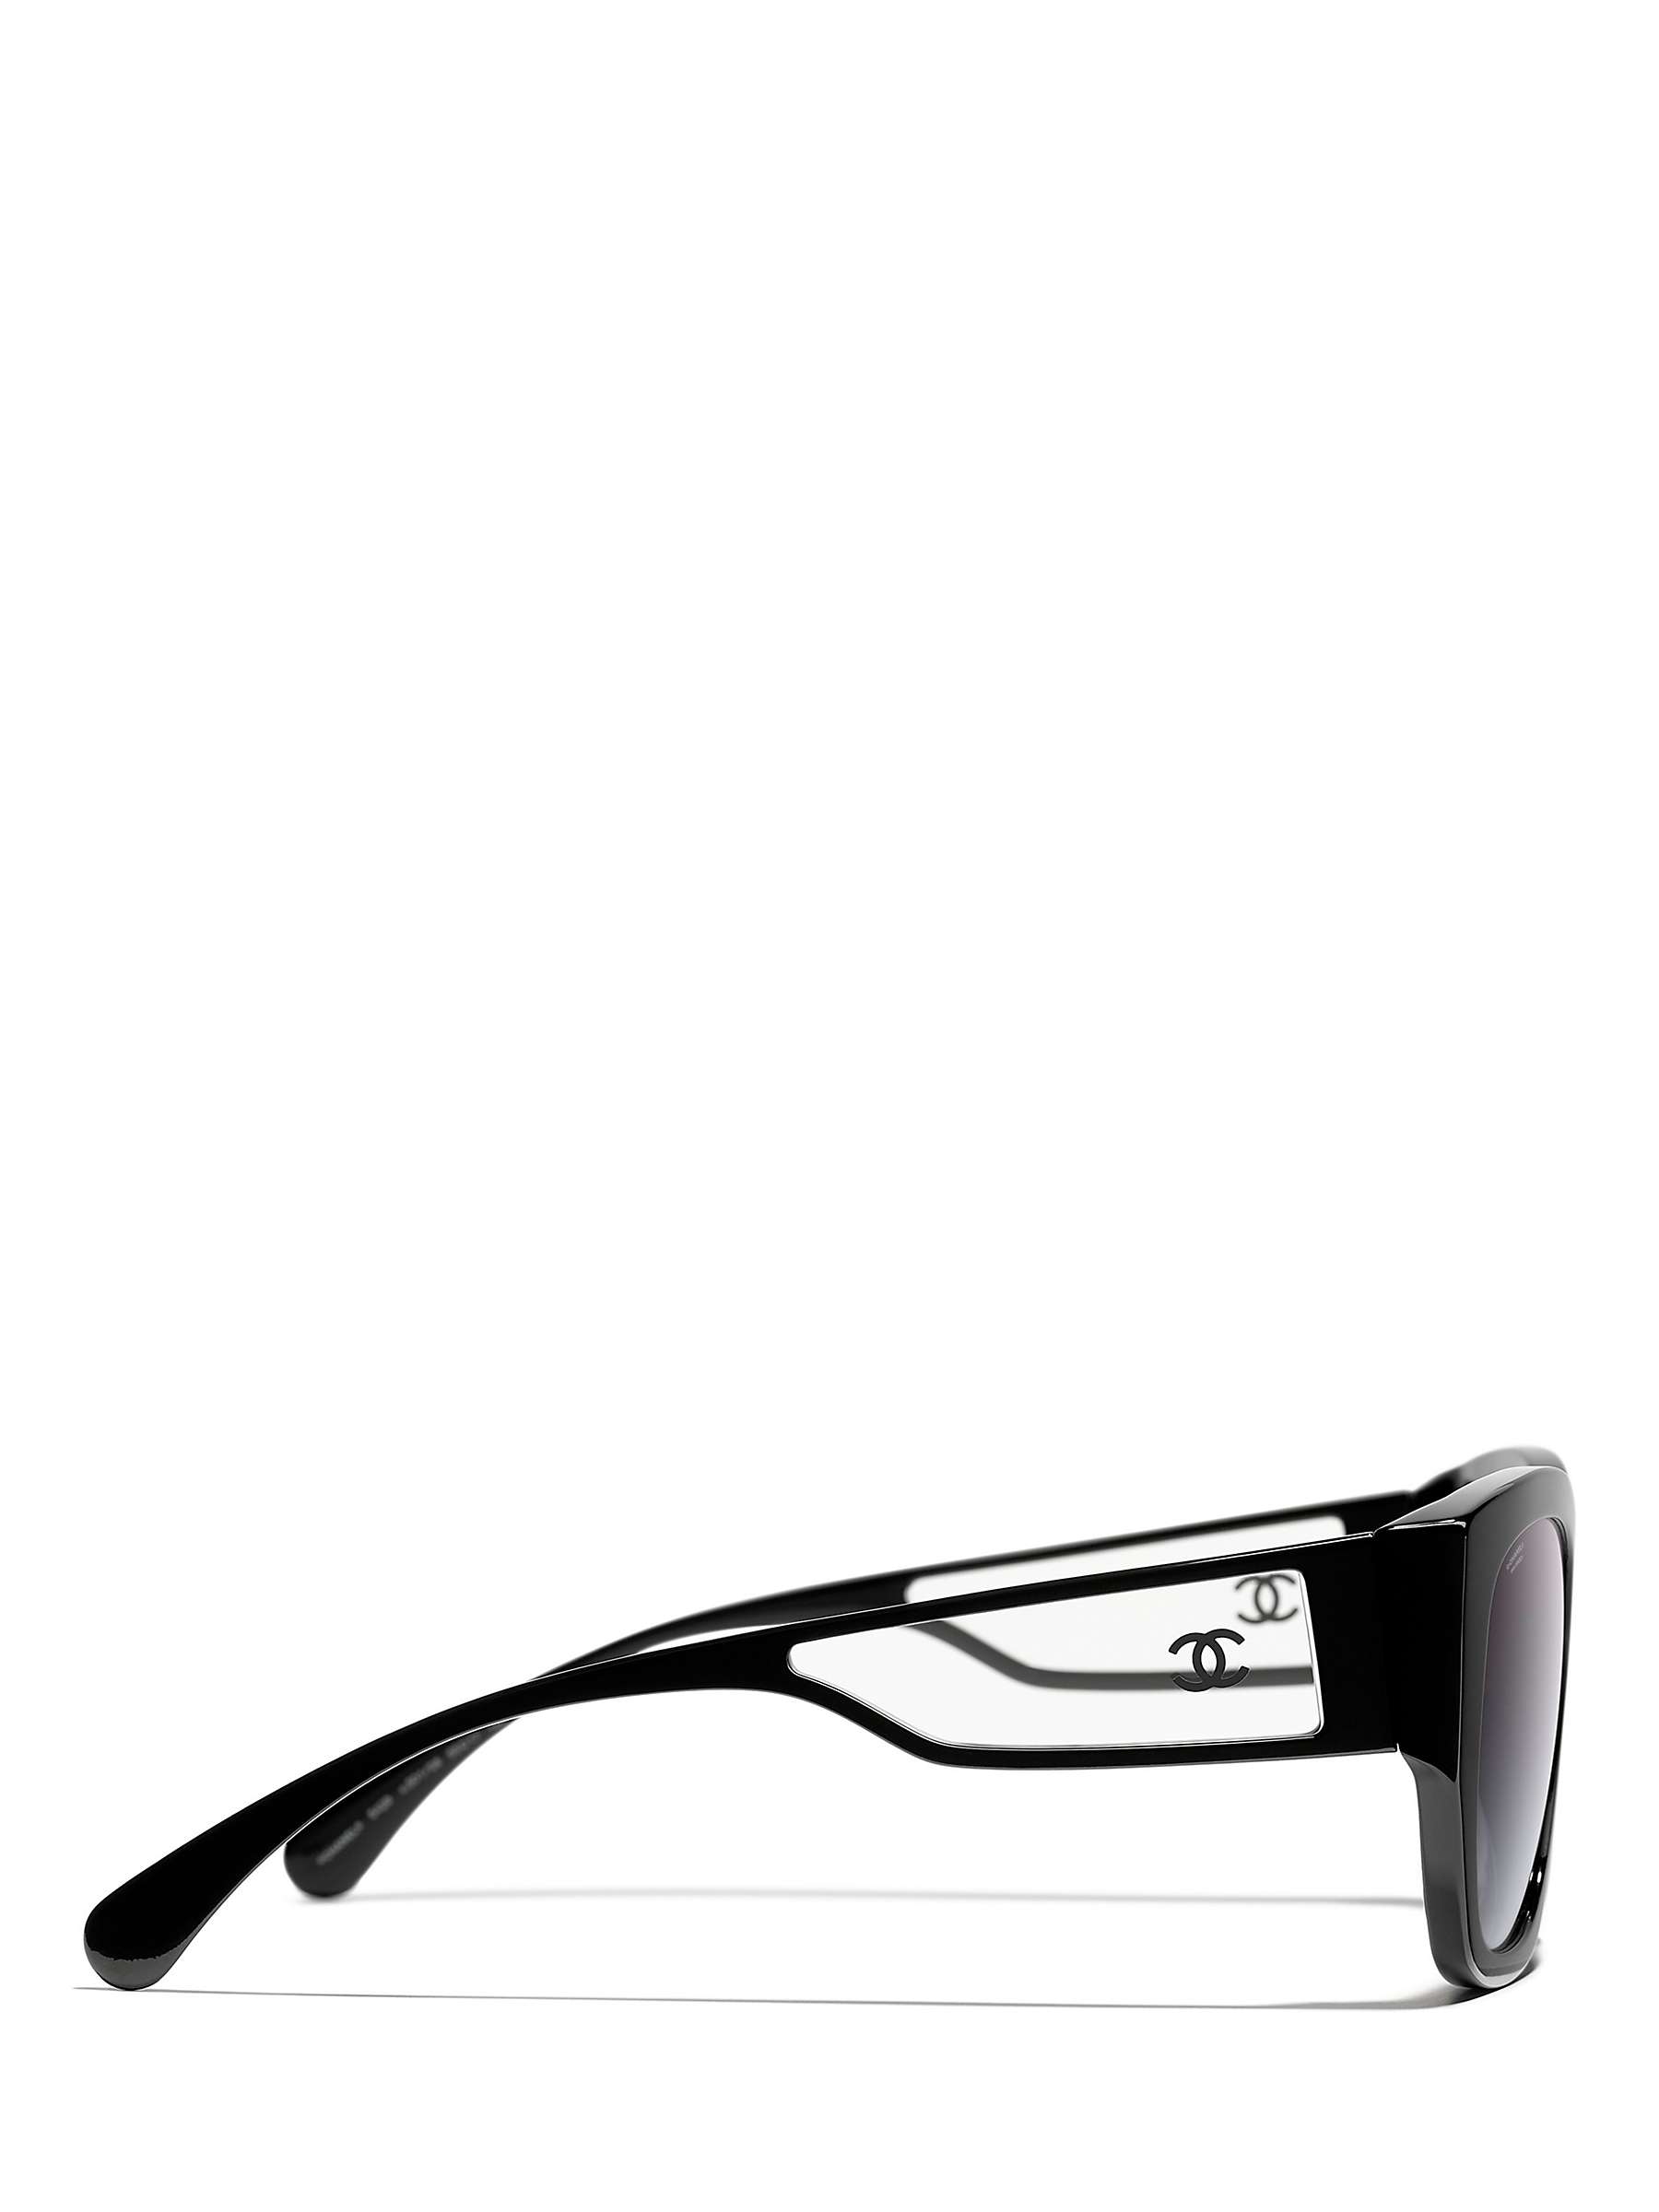 Buy CHANEL Irregular Sunglasses CH5429 Black/Grey Gradient Online at johnlewis.com